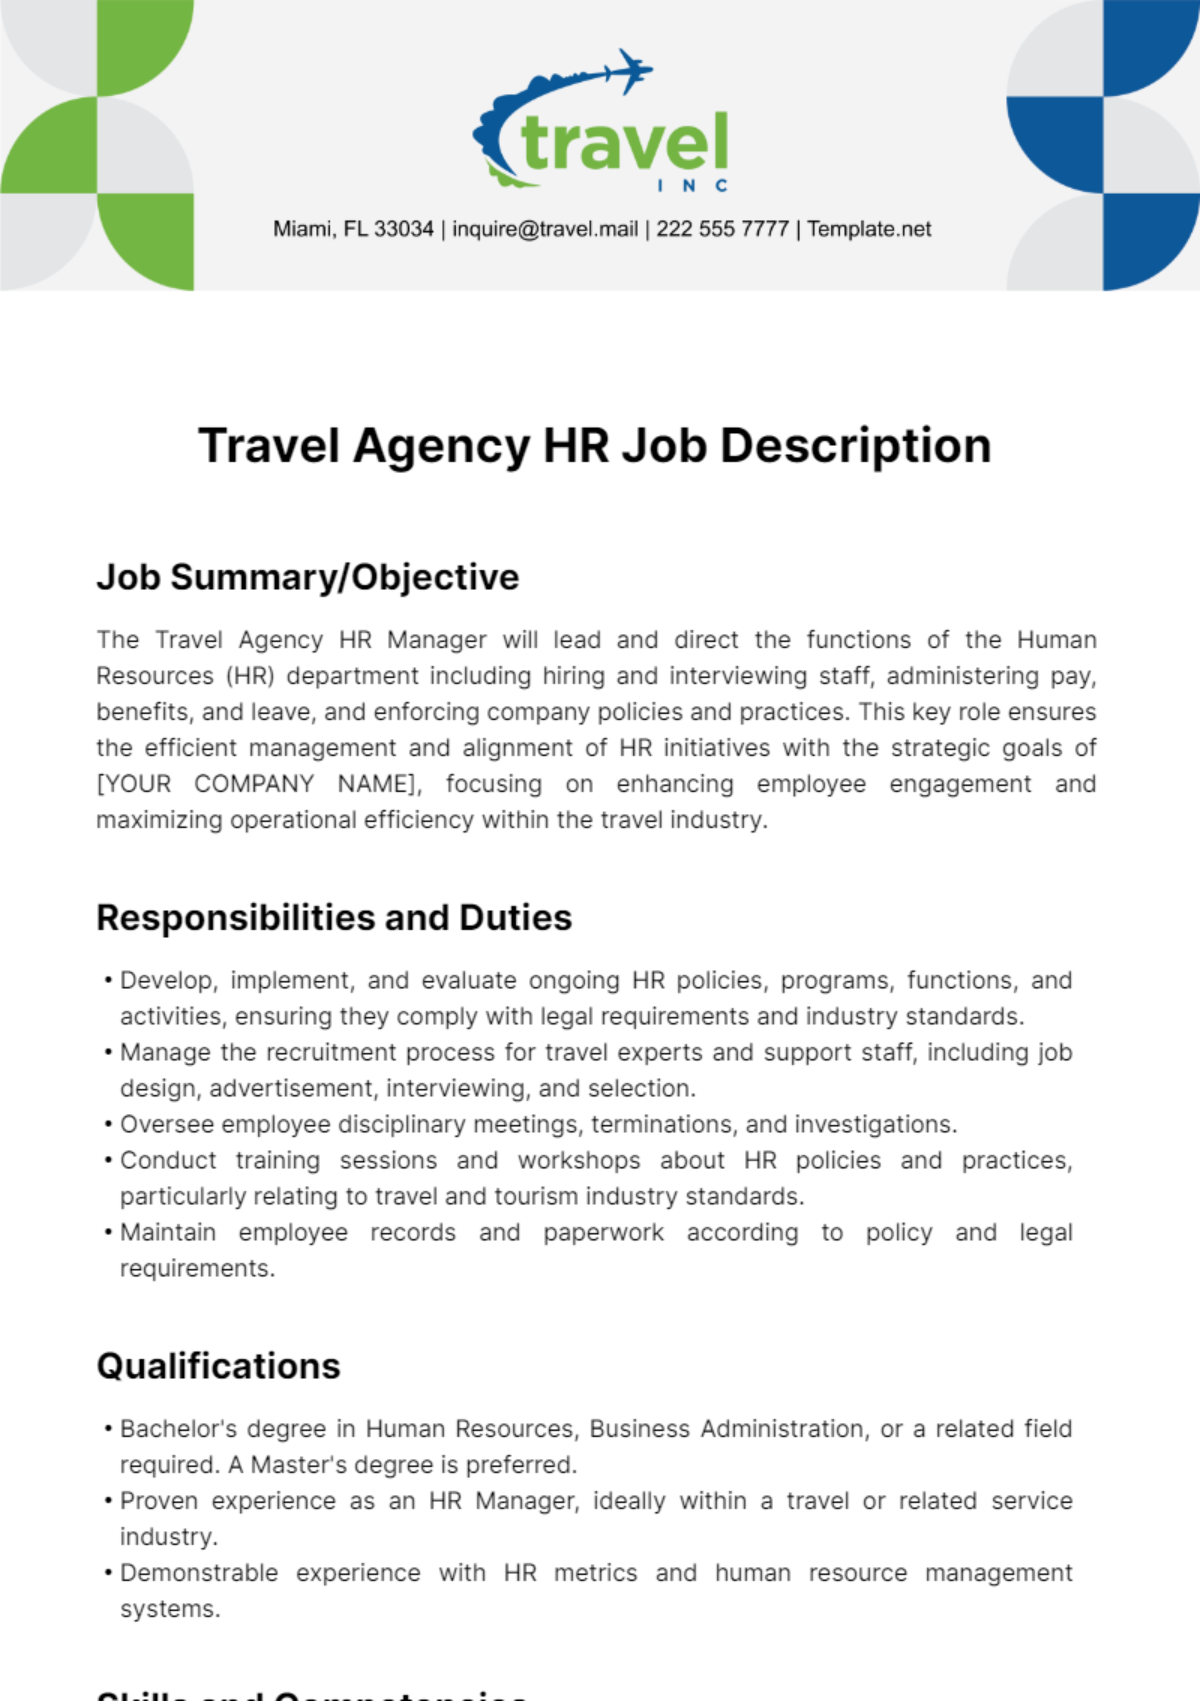 Free Travel Agency HR Job Description Template